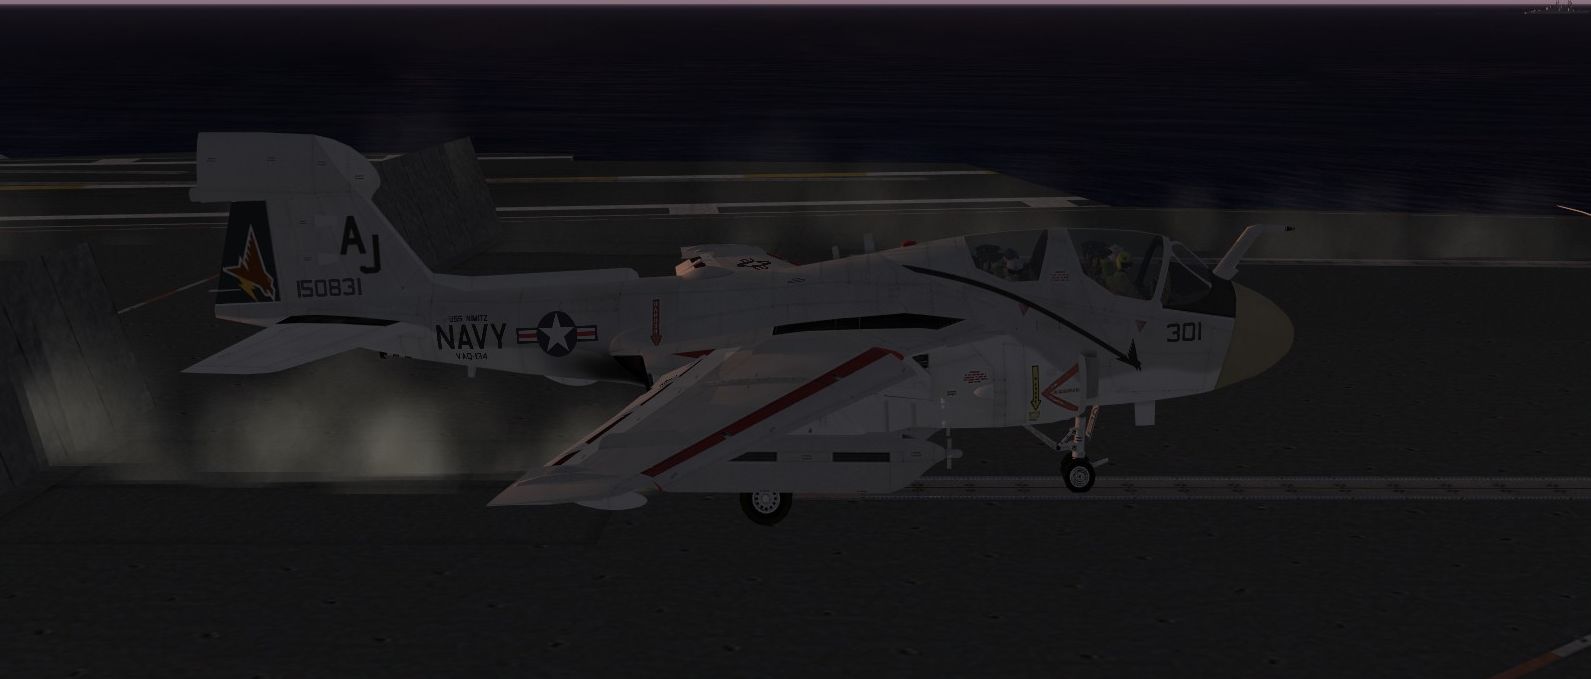 VAQ-134 "Garudas" EA-6B Prowler Skin